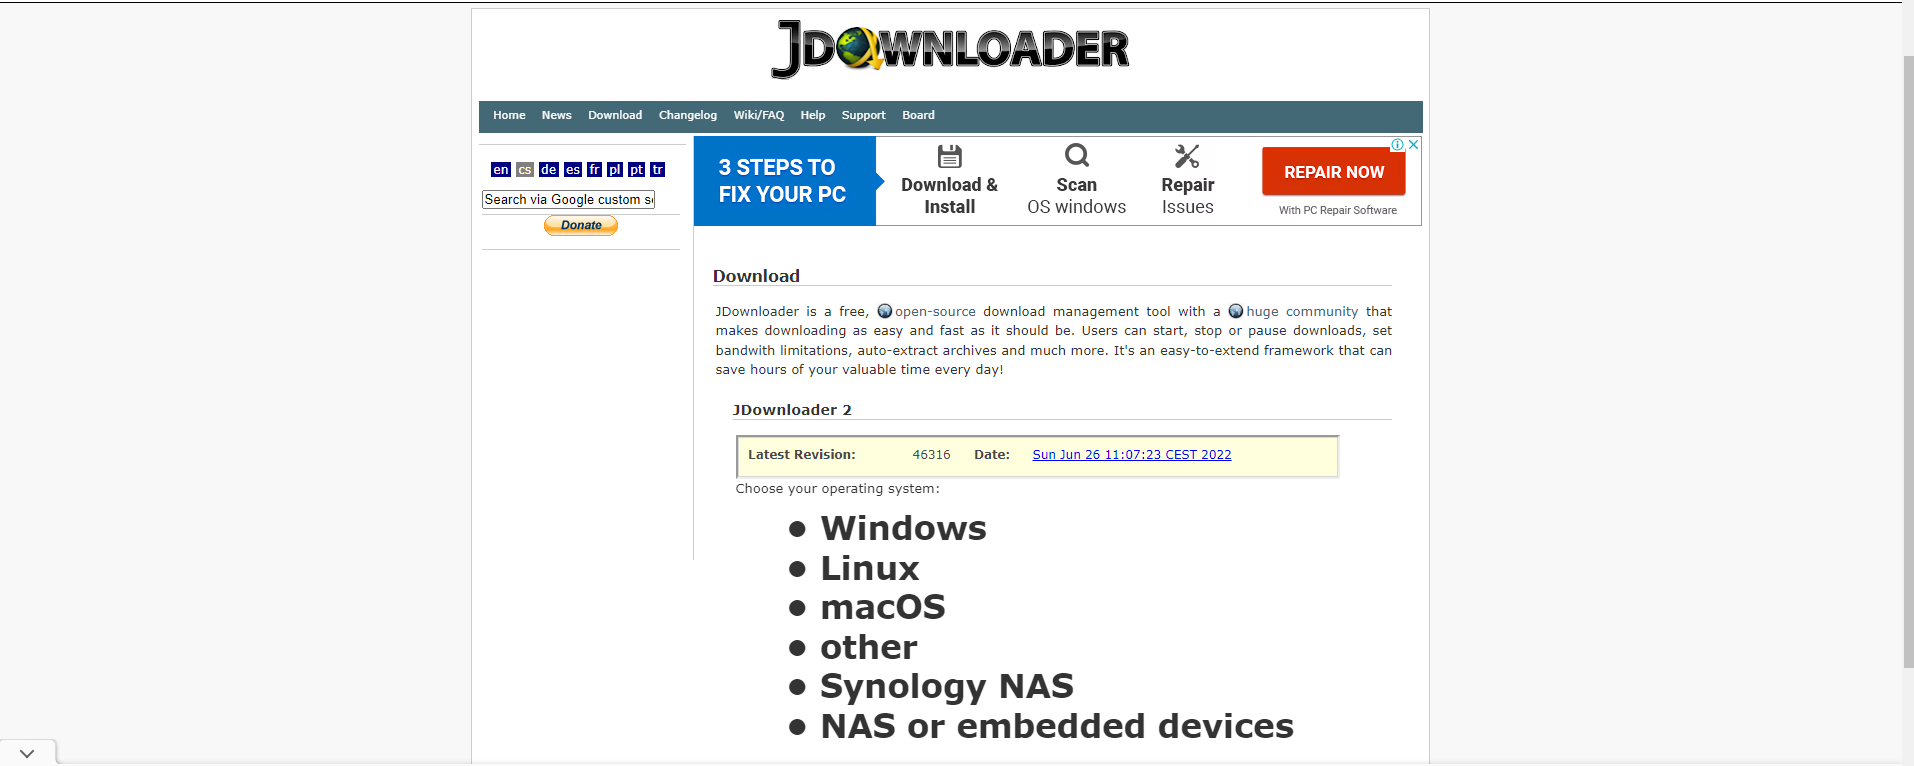 JDownloader- Dwonload Section